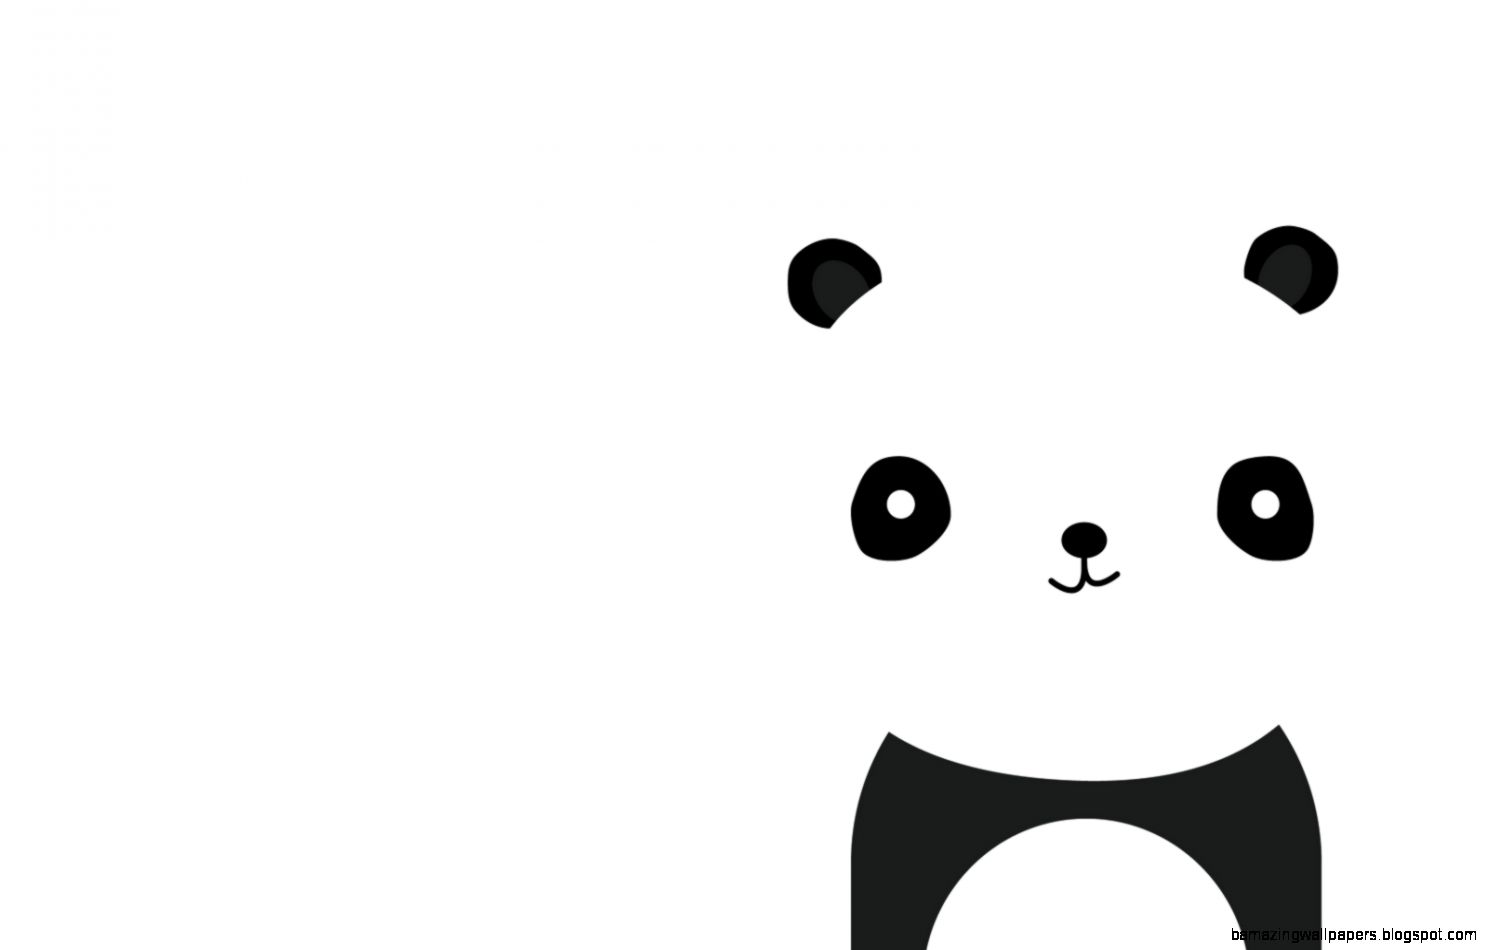 Cute Pandas Tumblr | Amazing Wallpapers